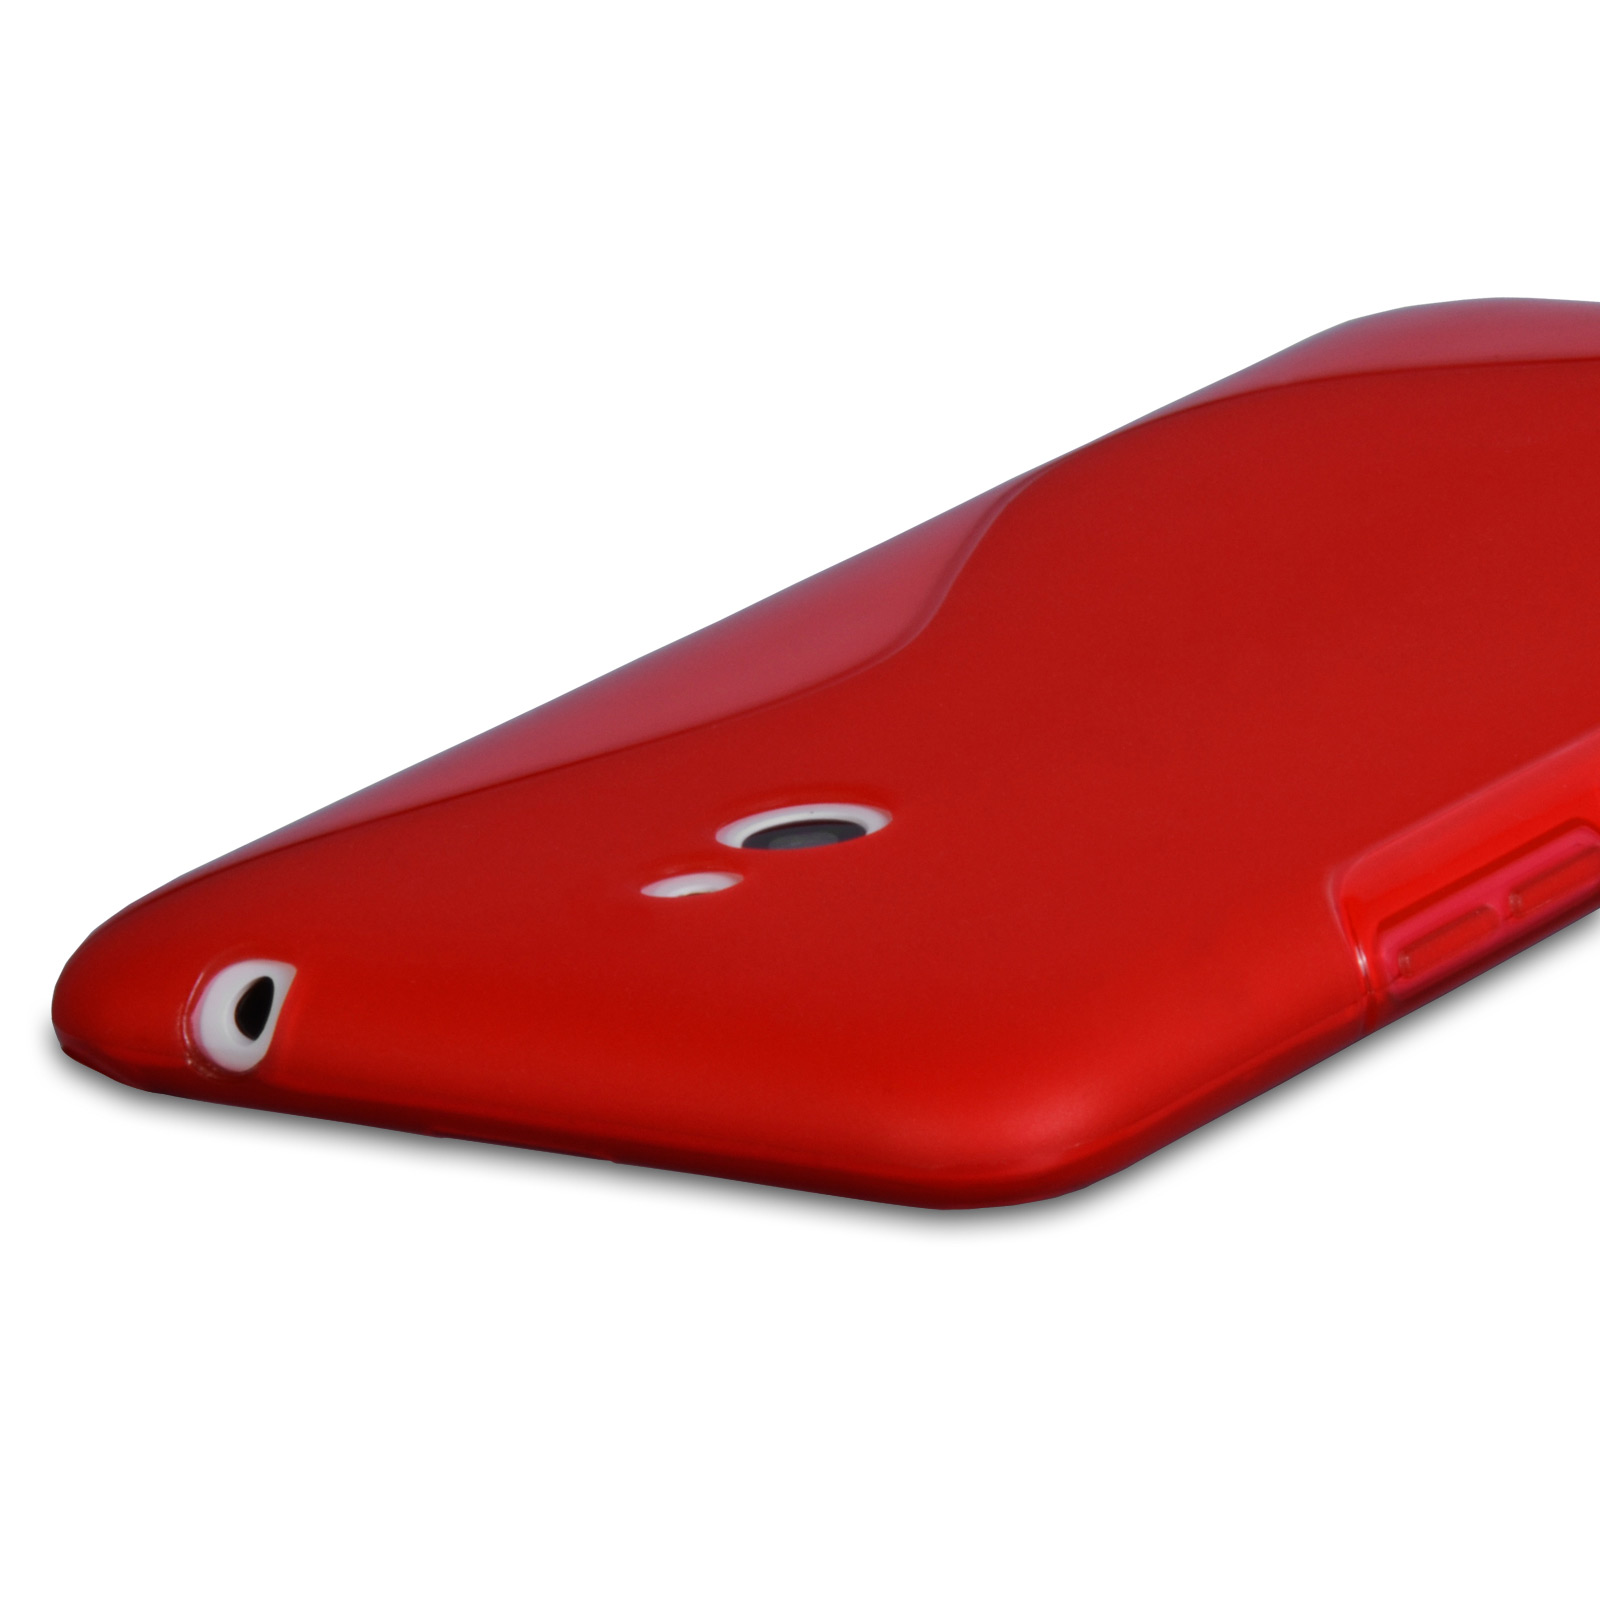 Caseflex Nokia Lumia 1320 Silicone Gel S-Line Case - Red